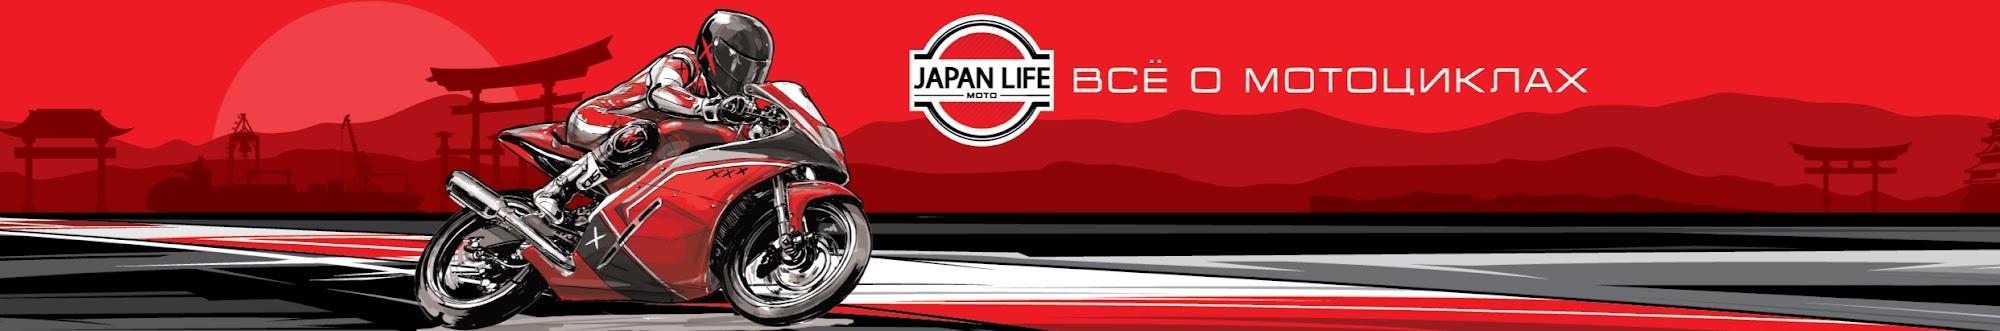 Japan Life MOTO — Все о мотоциклах. Мото из Японии